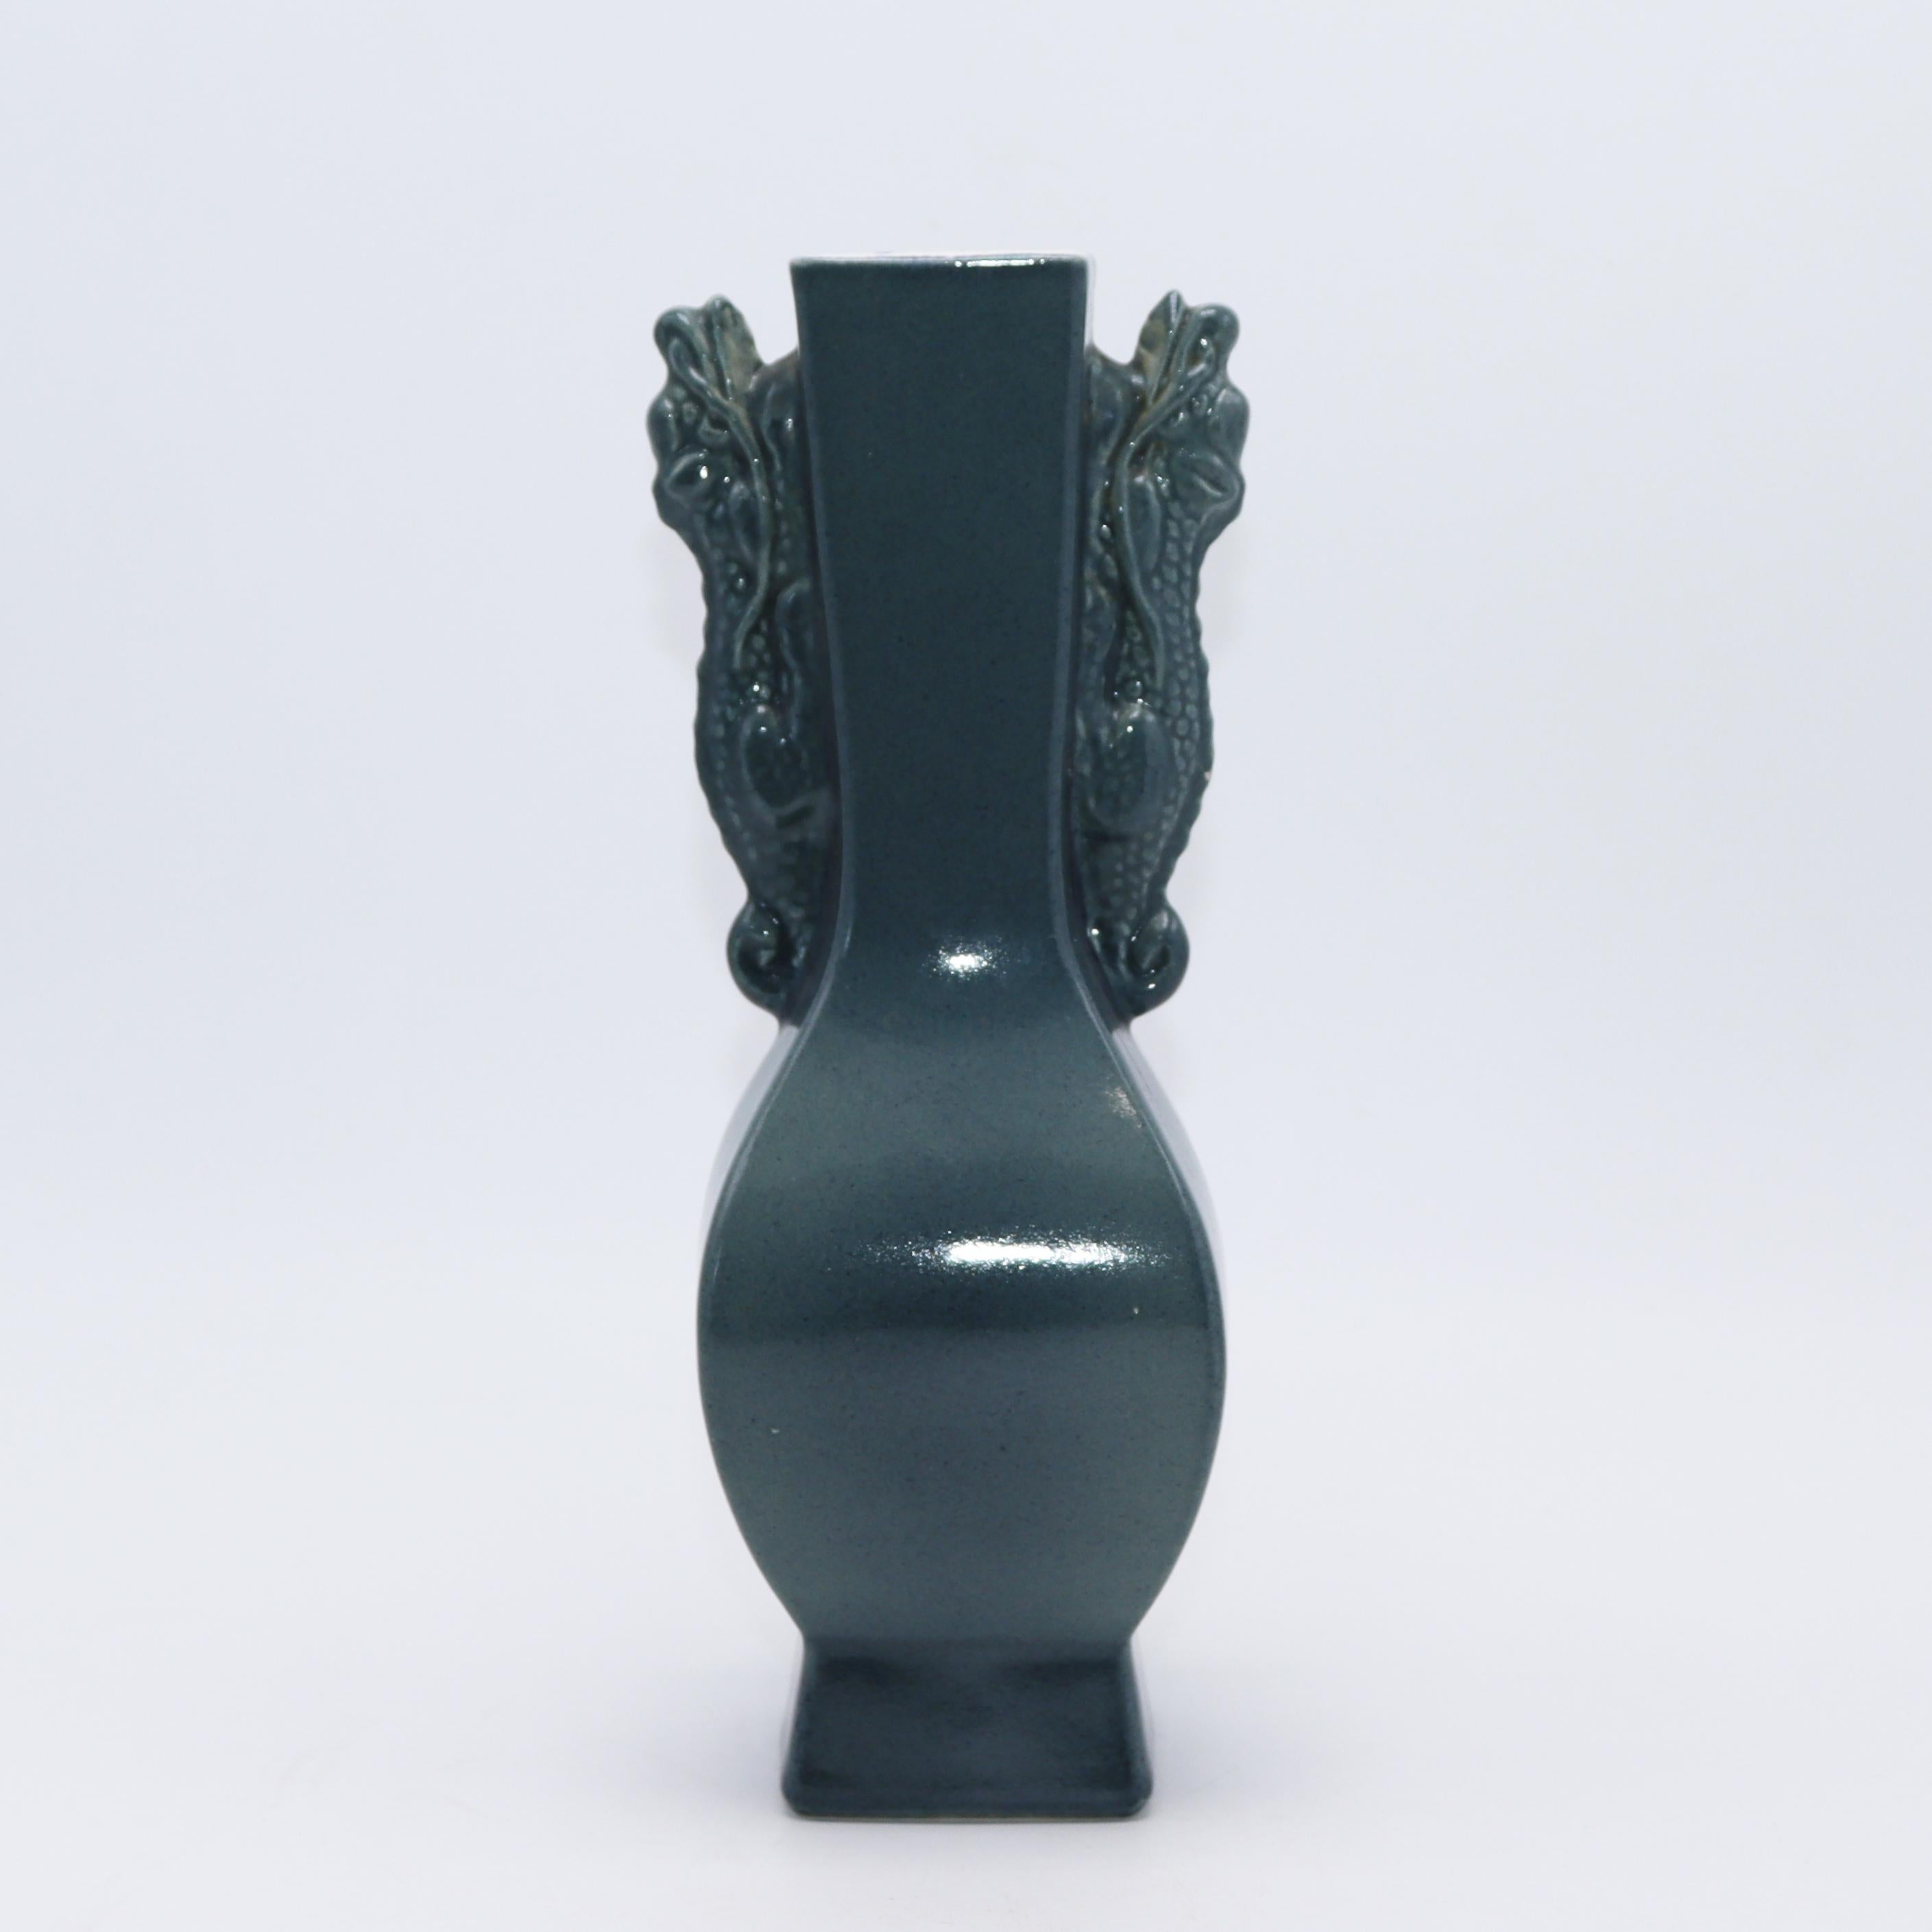 Green ceramic vase with dragons, c. 1960.